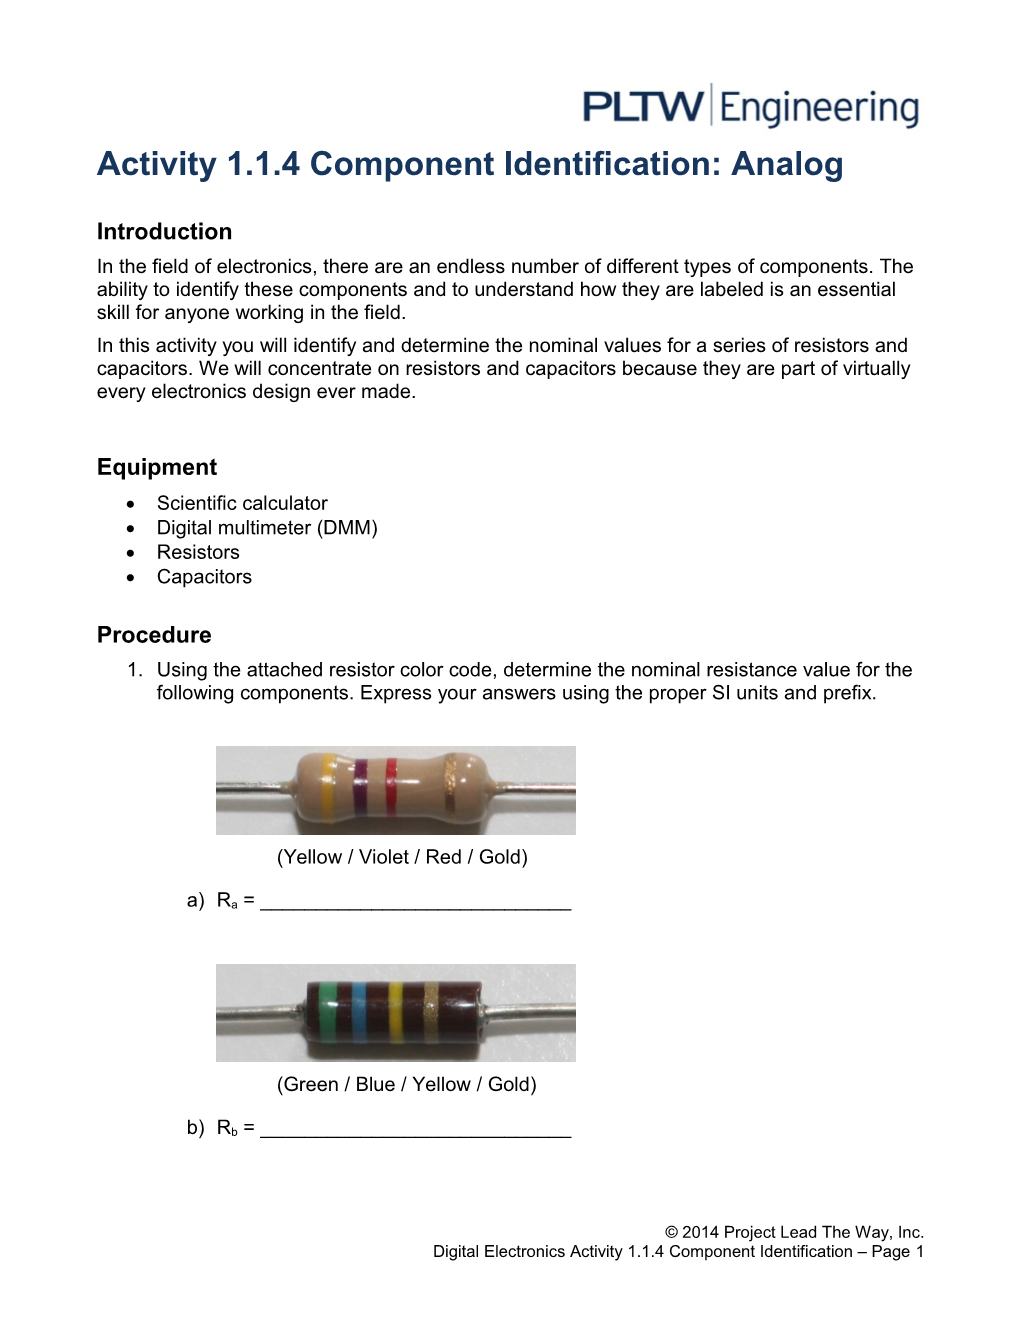 Activity 1.1.4 Component Identification: Analog